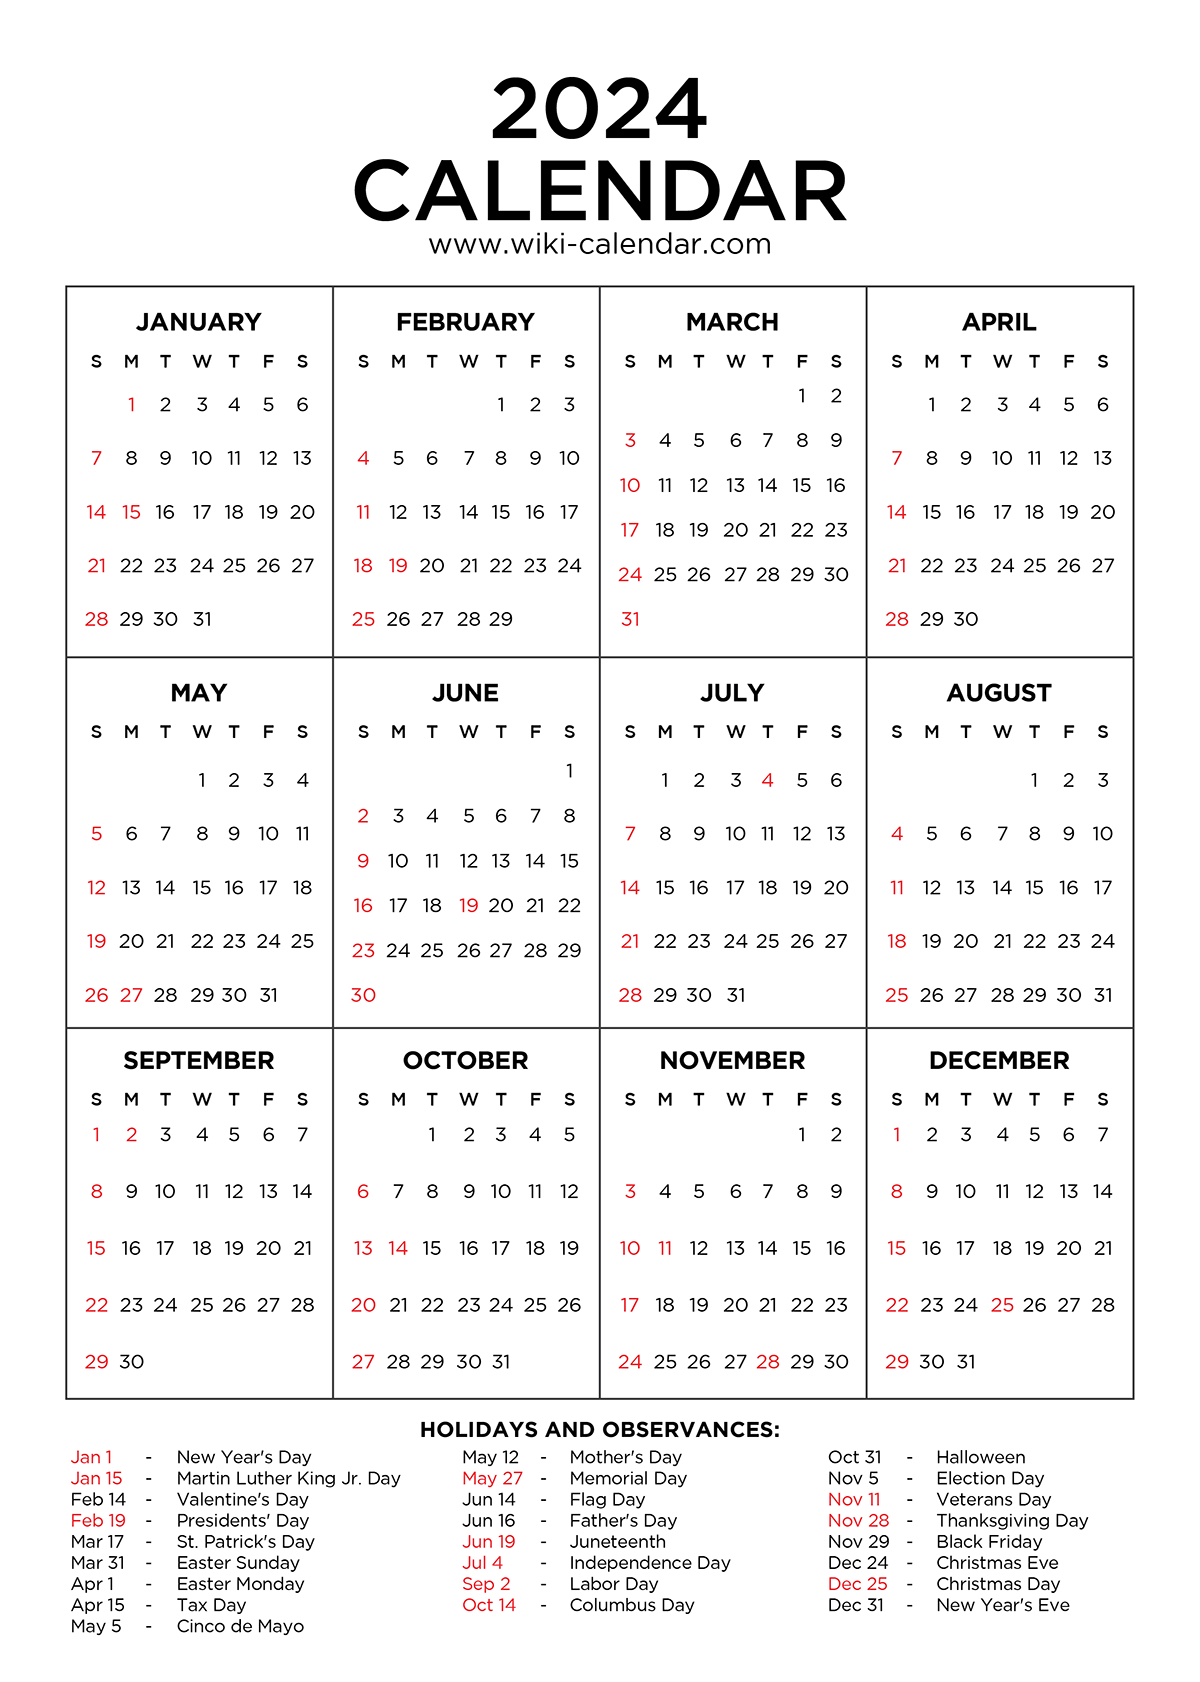 Year 2024 Calendar Printable With Holidays - Wiki Calendar | Free Printable Calendar 2024 With Us Holidays